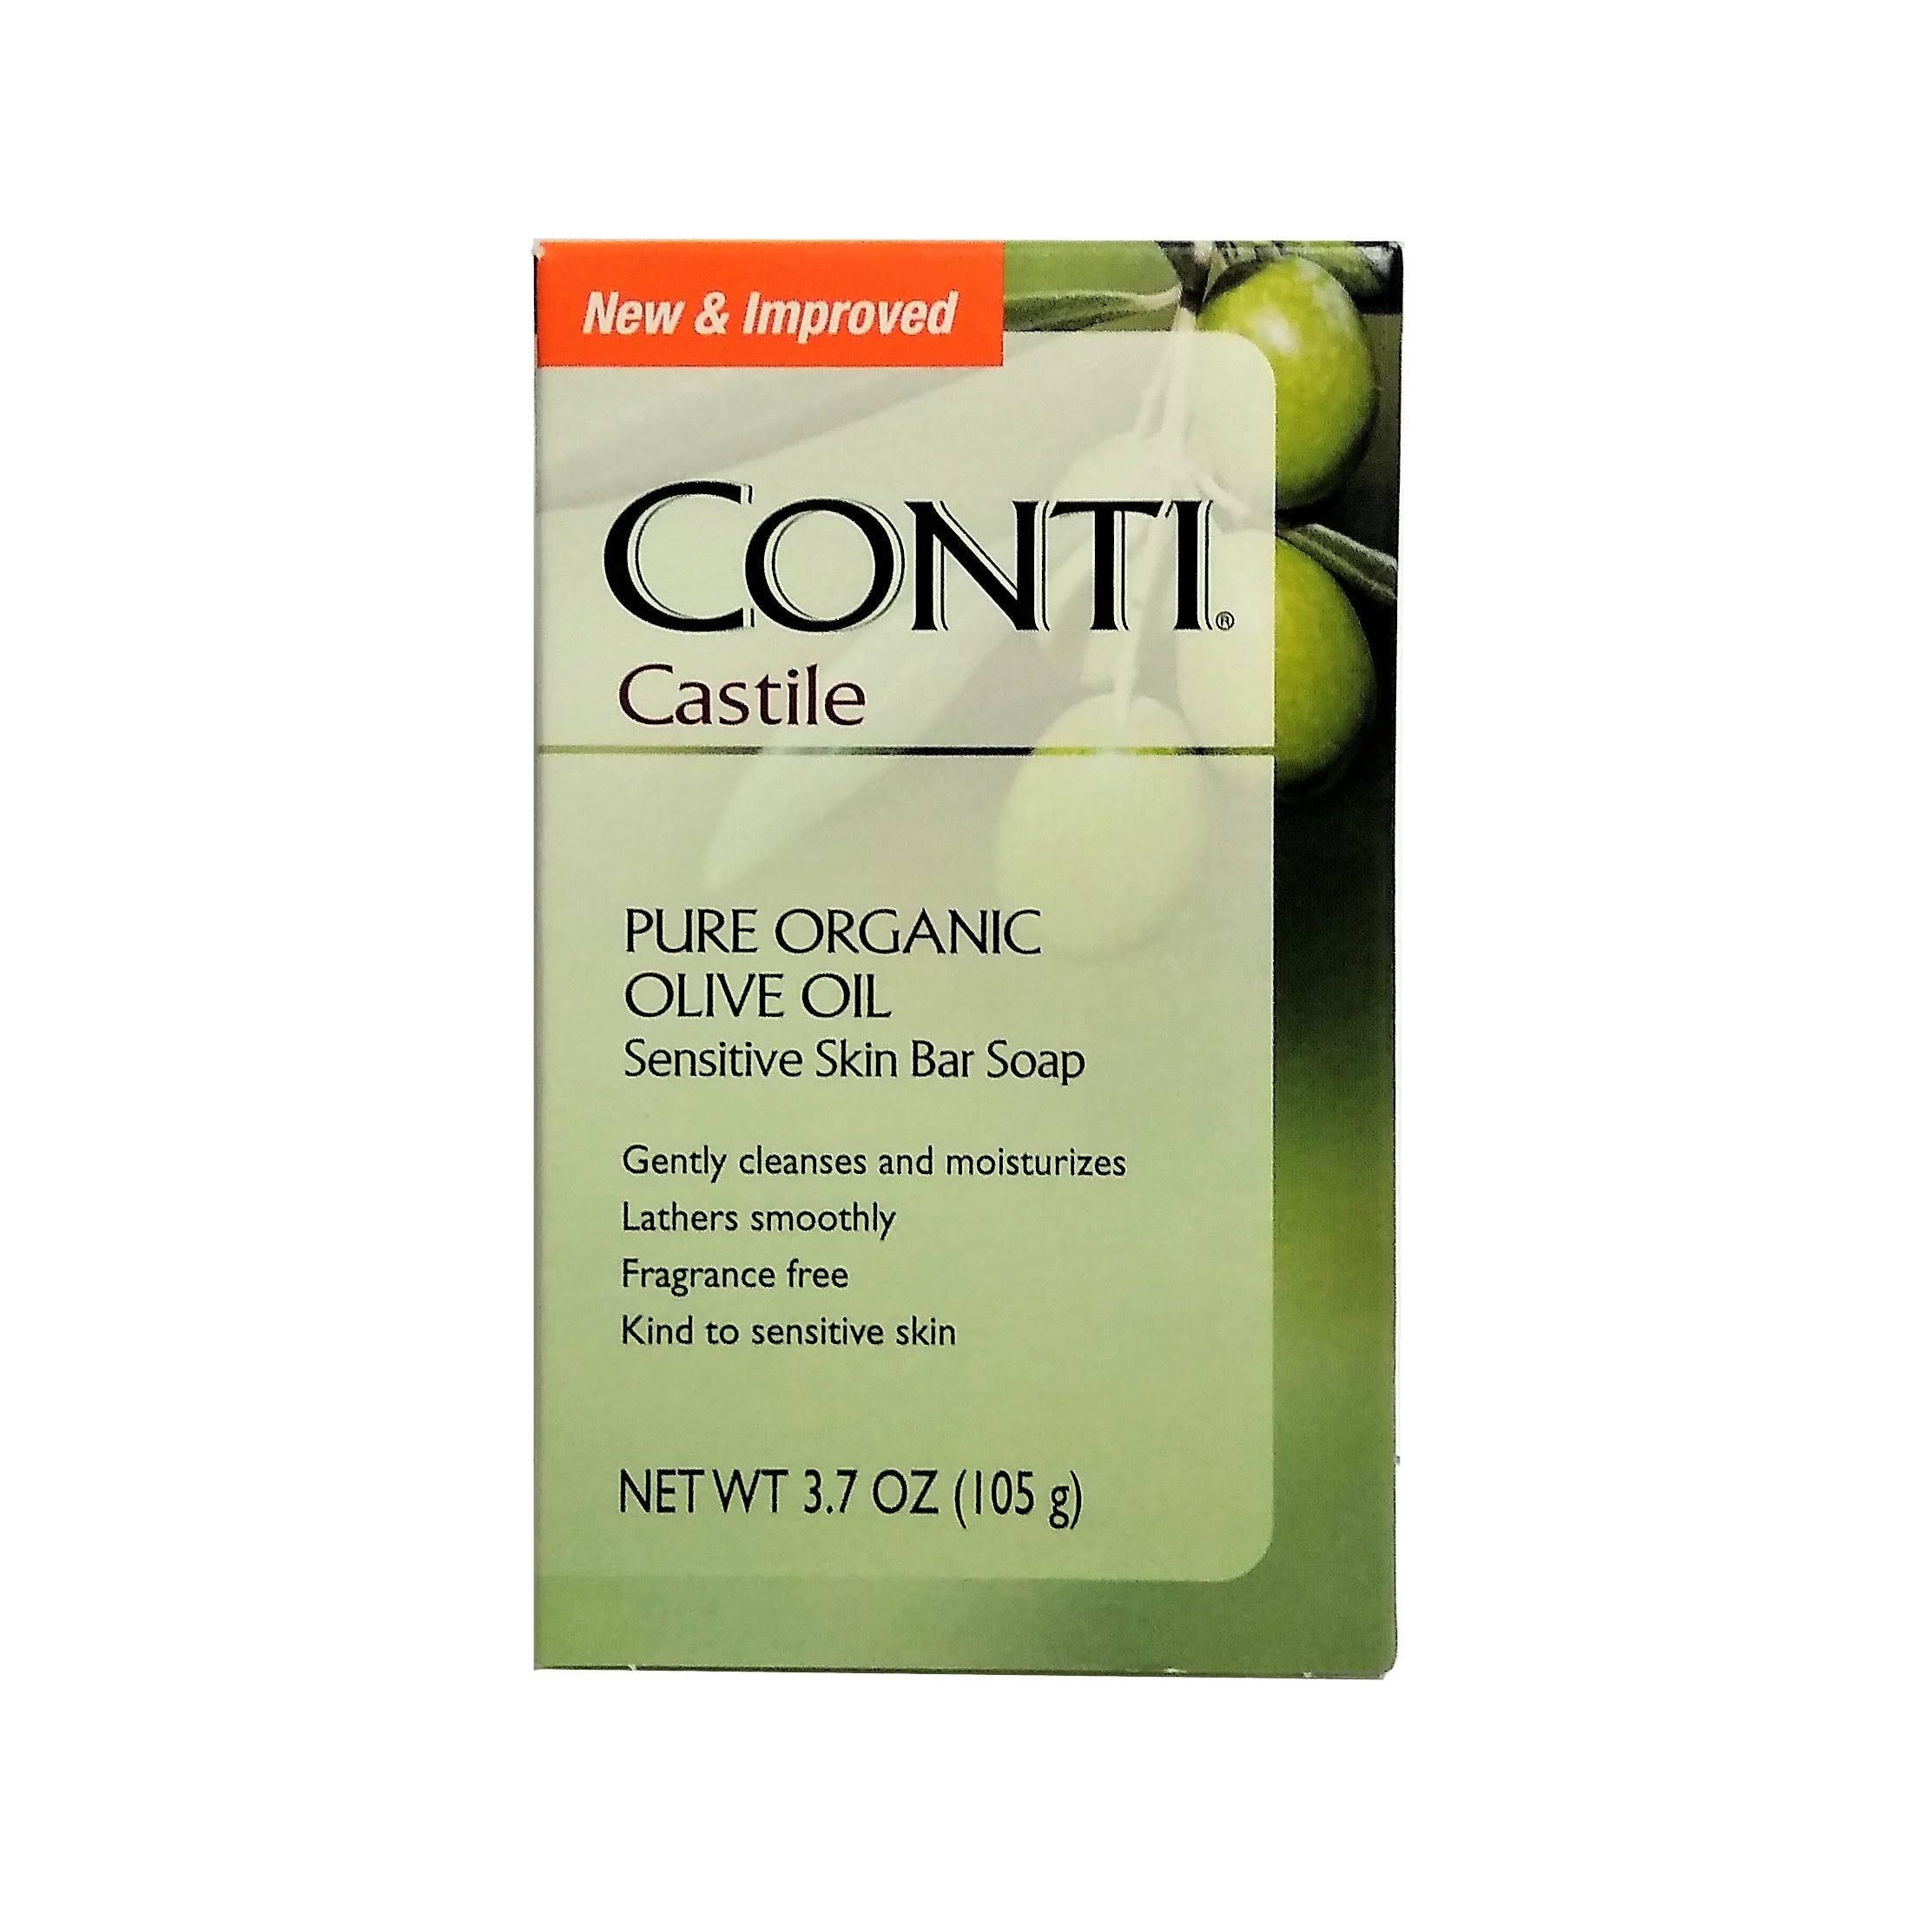 Conti Castile Olive Oil Sensitive Skin Bar Soap 4 oz